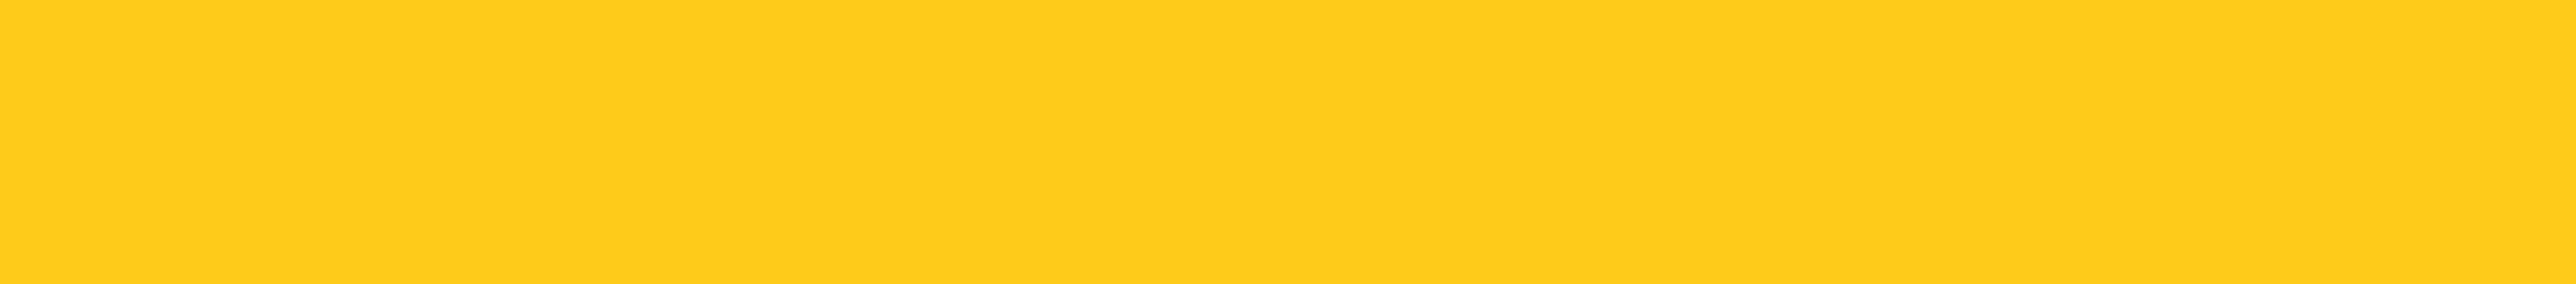 Yellowpin Prague's profile banner